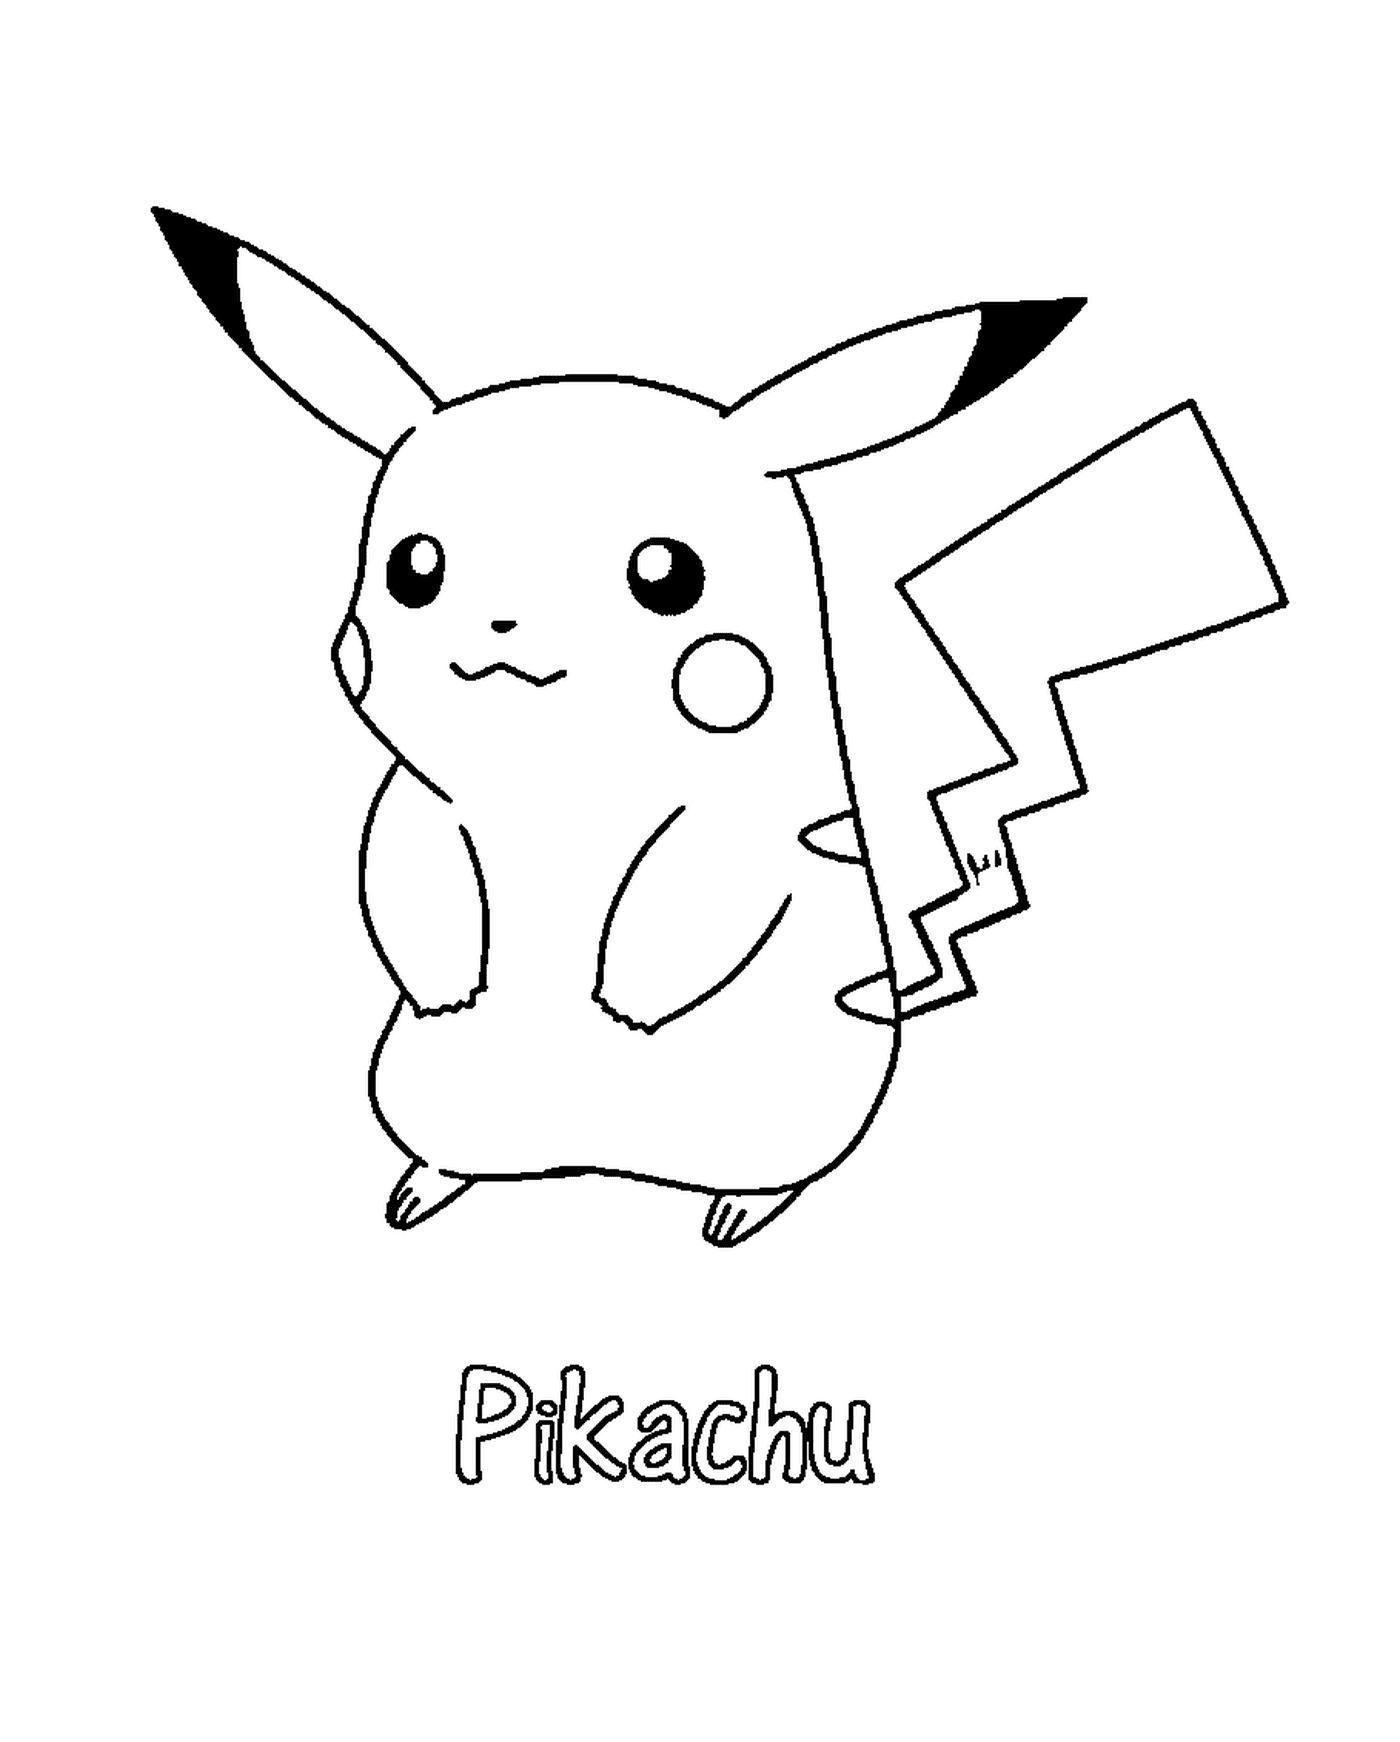  Pikachu with a joyful expression 